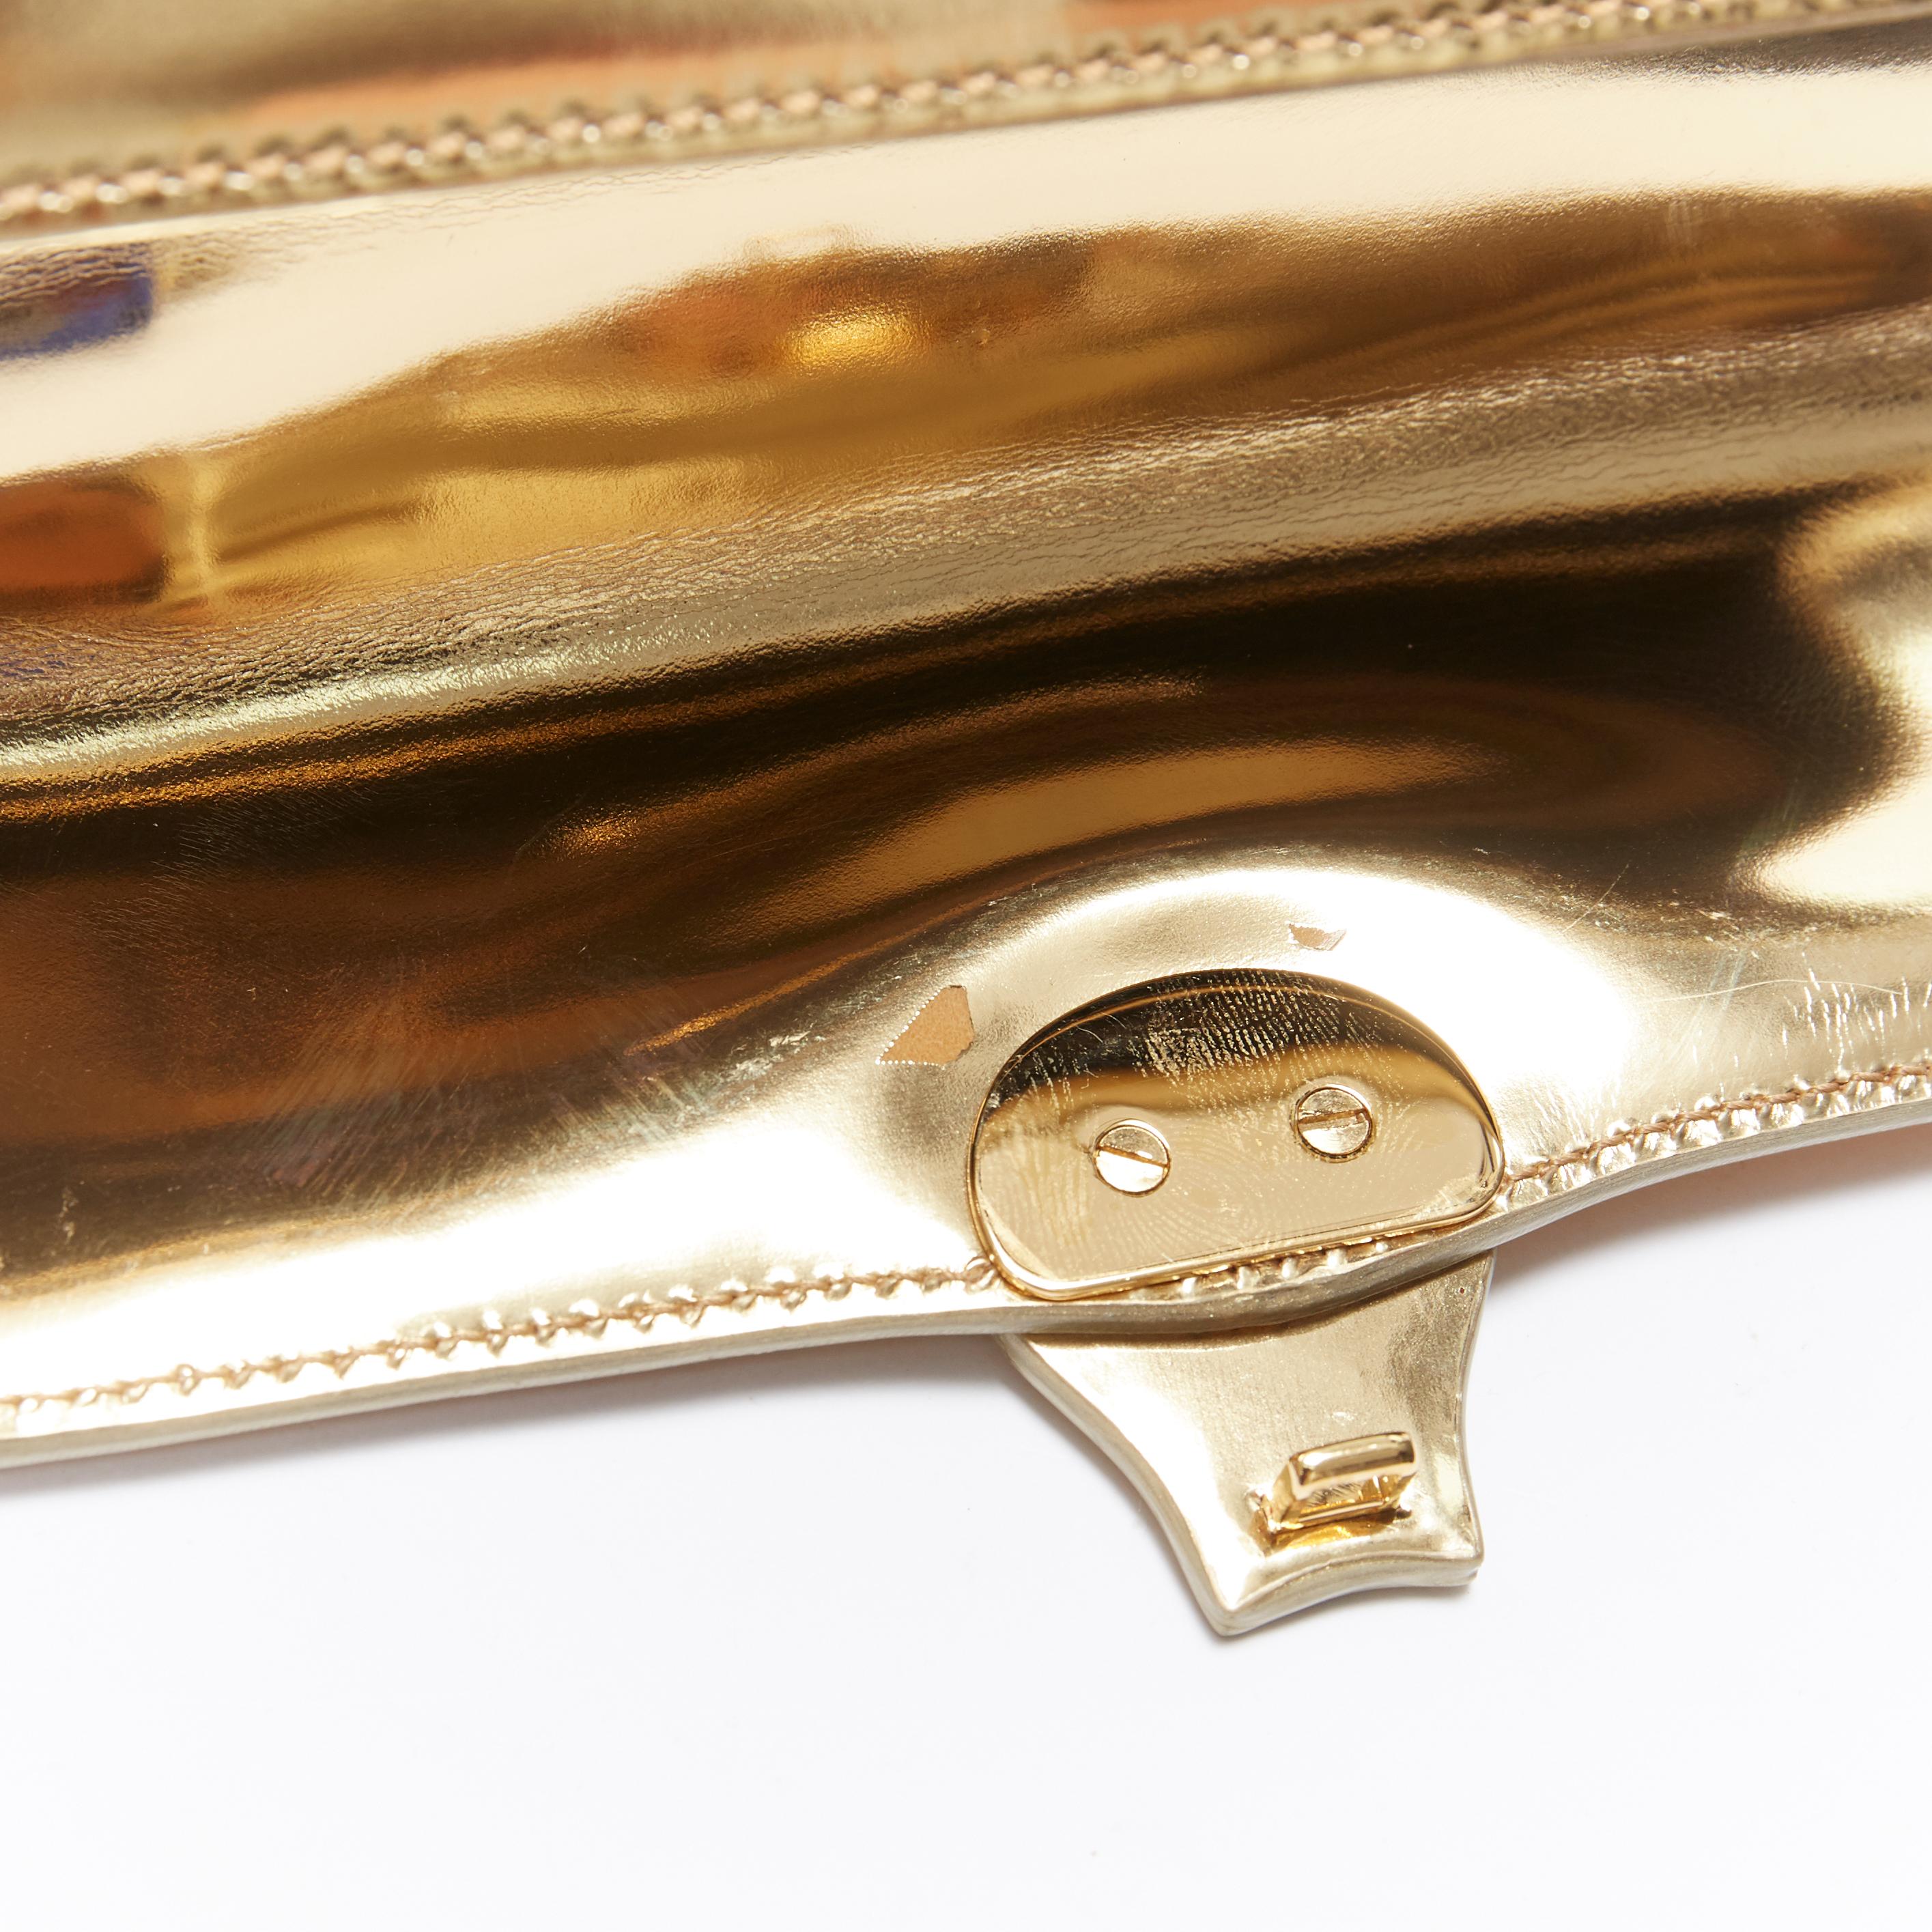 RALPH LAUREN Ricky mirrored gold lock flap leather crossbody small satchel bag 7